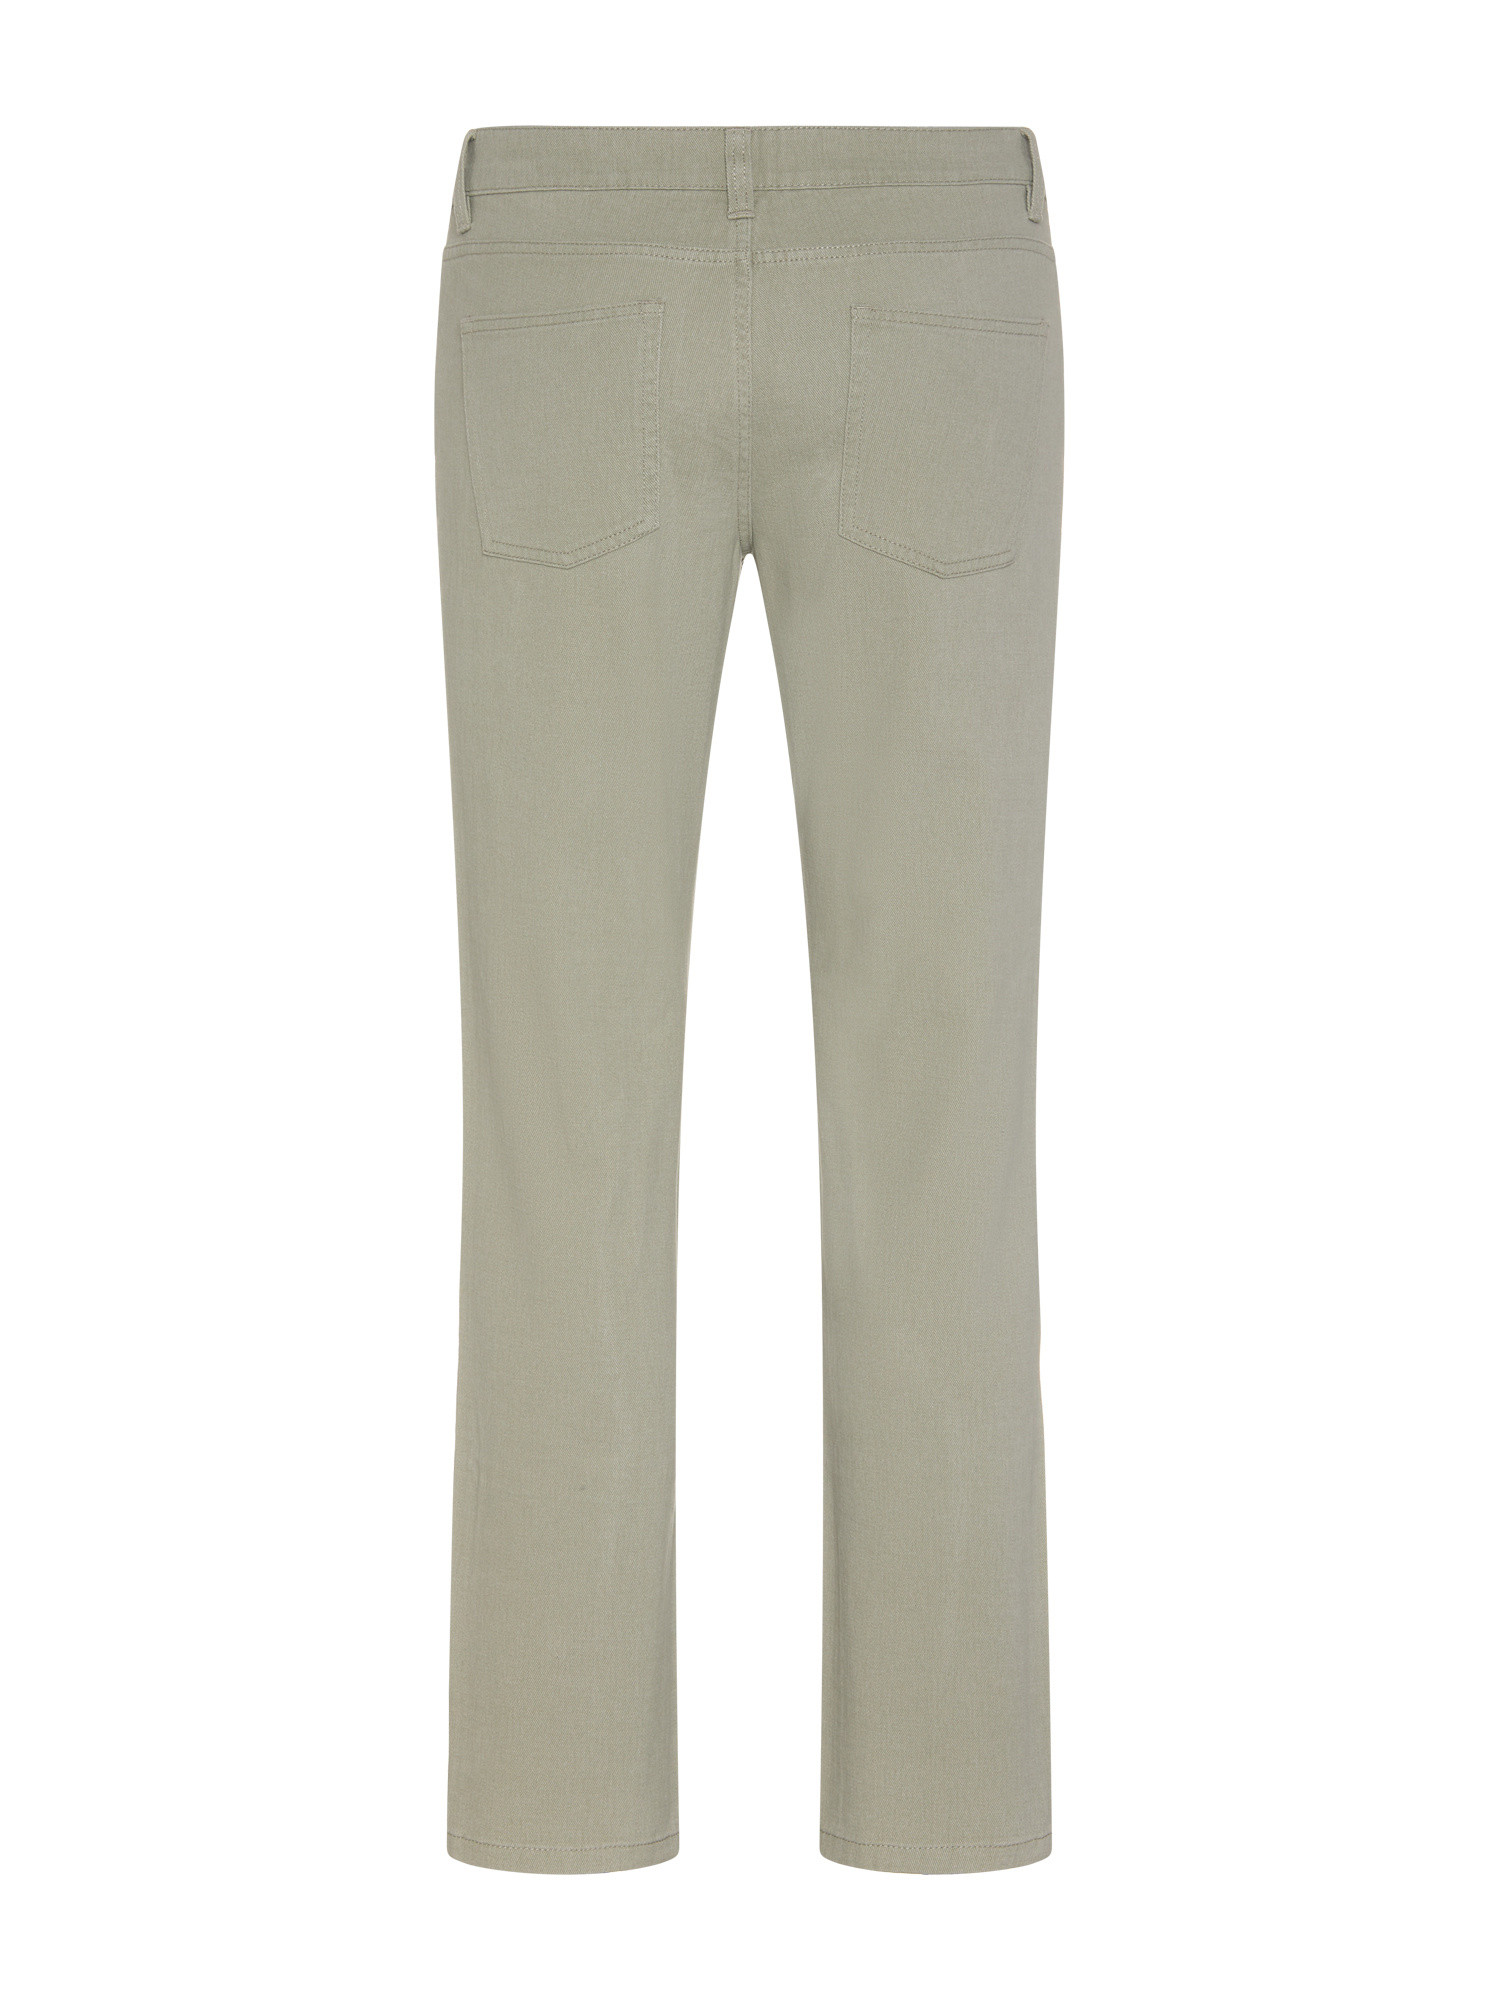 JCT - Pantaloni regular fit cinque tasche in puro cotone, Verde salvia, large image number 1